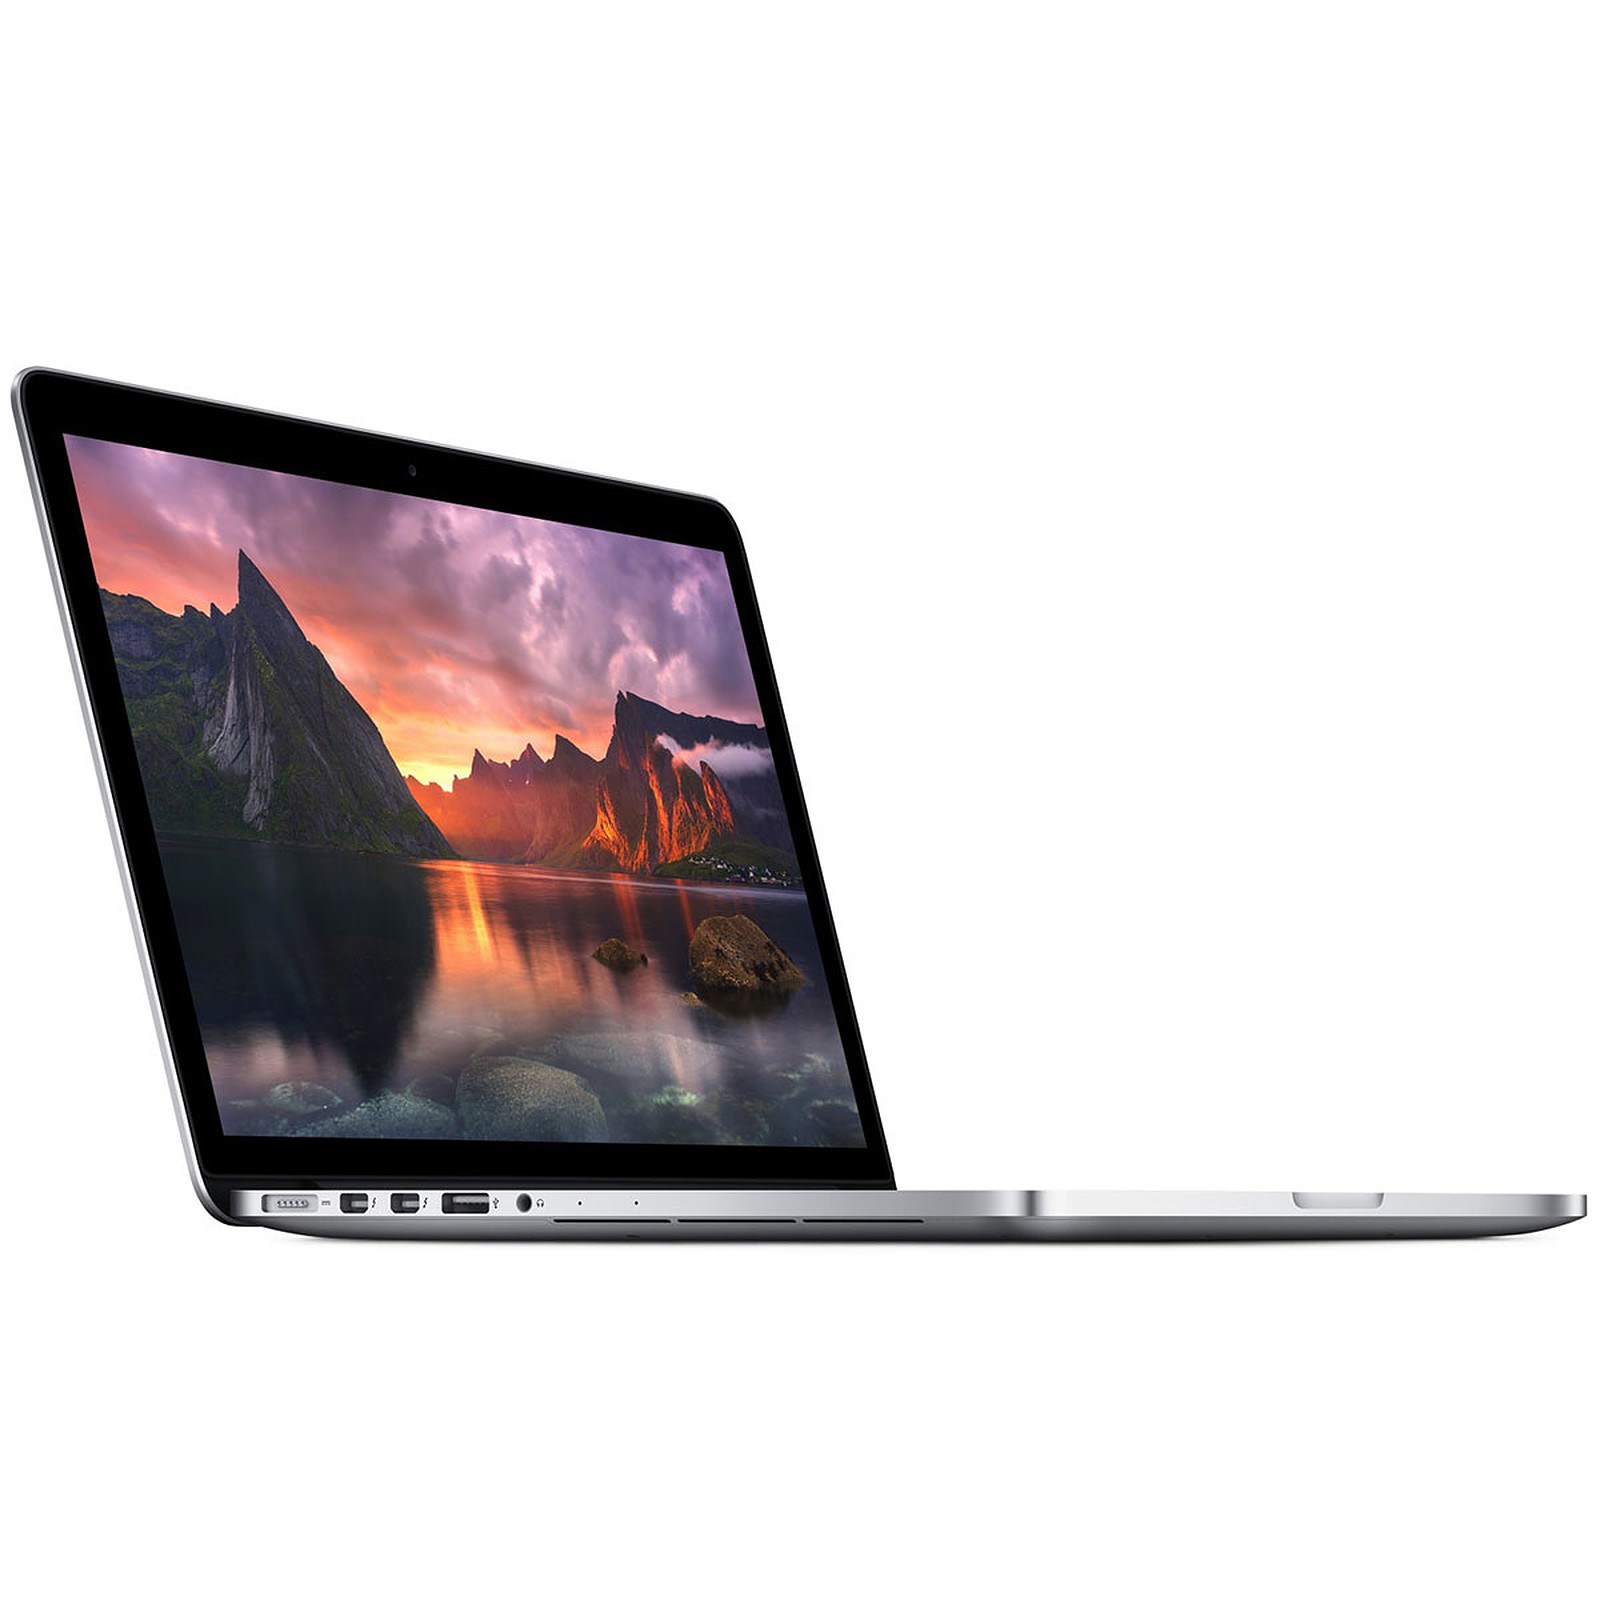 Ремонт MacBook MacBook Pro 15 (A1286)